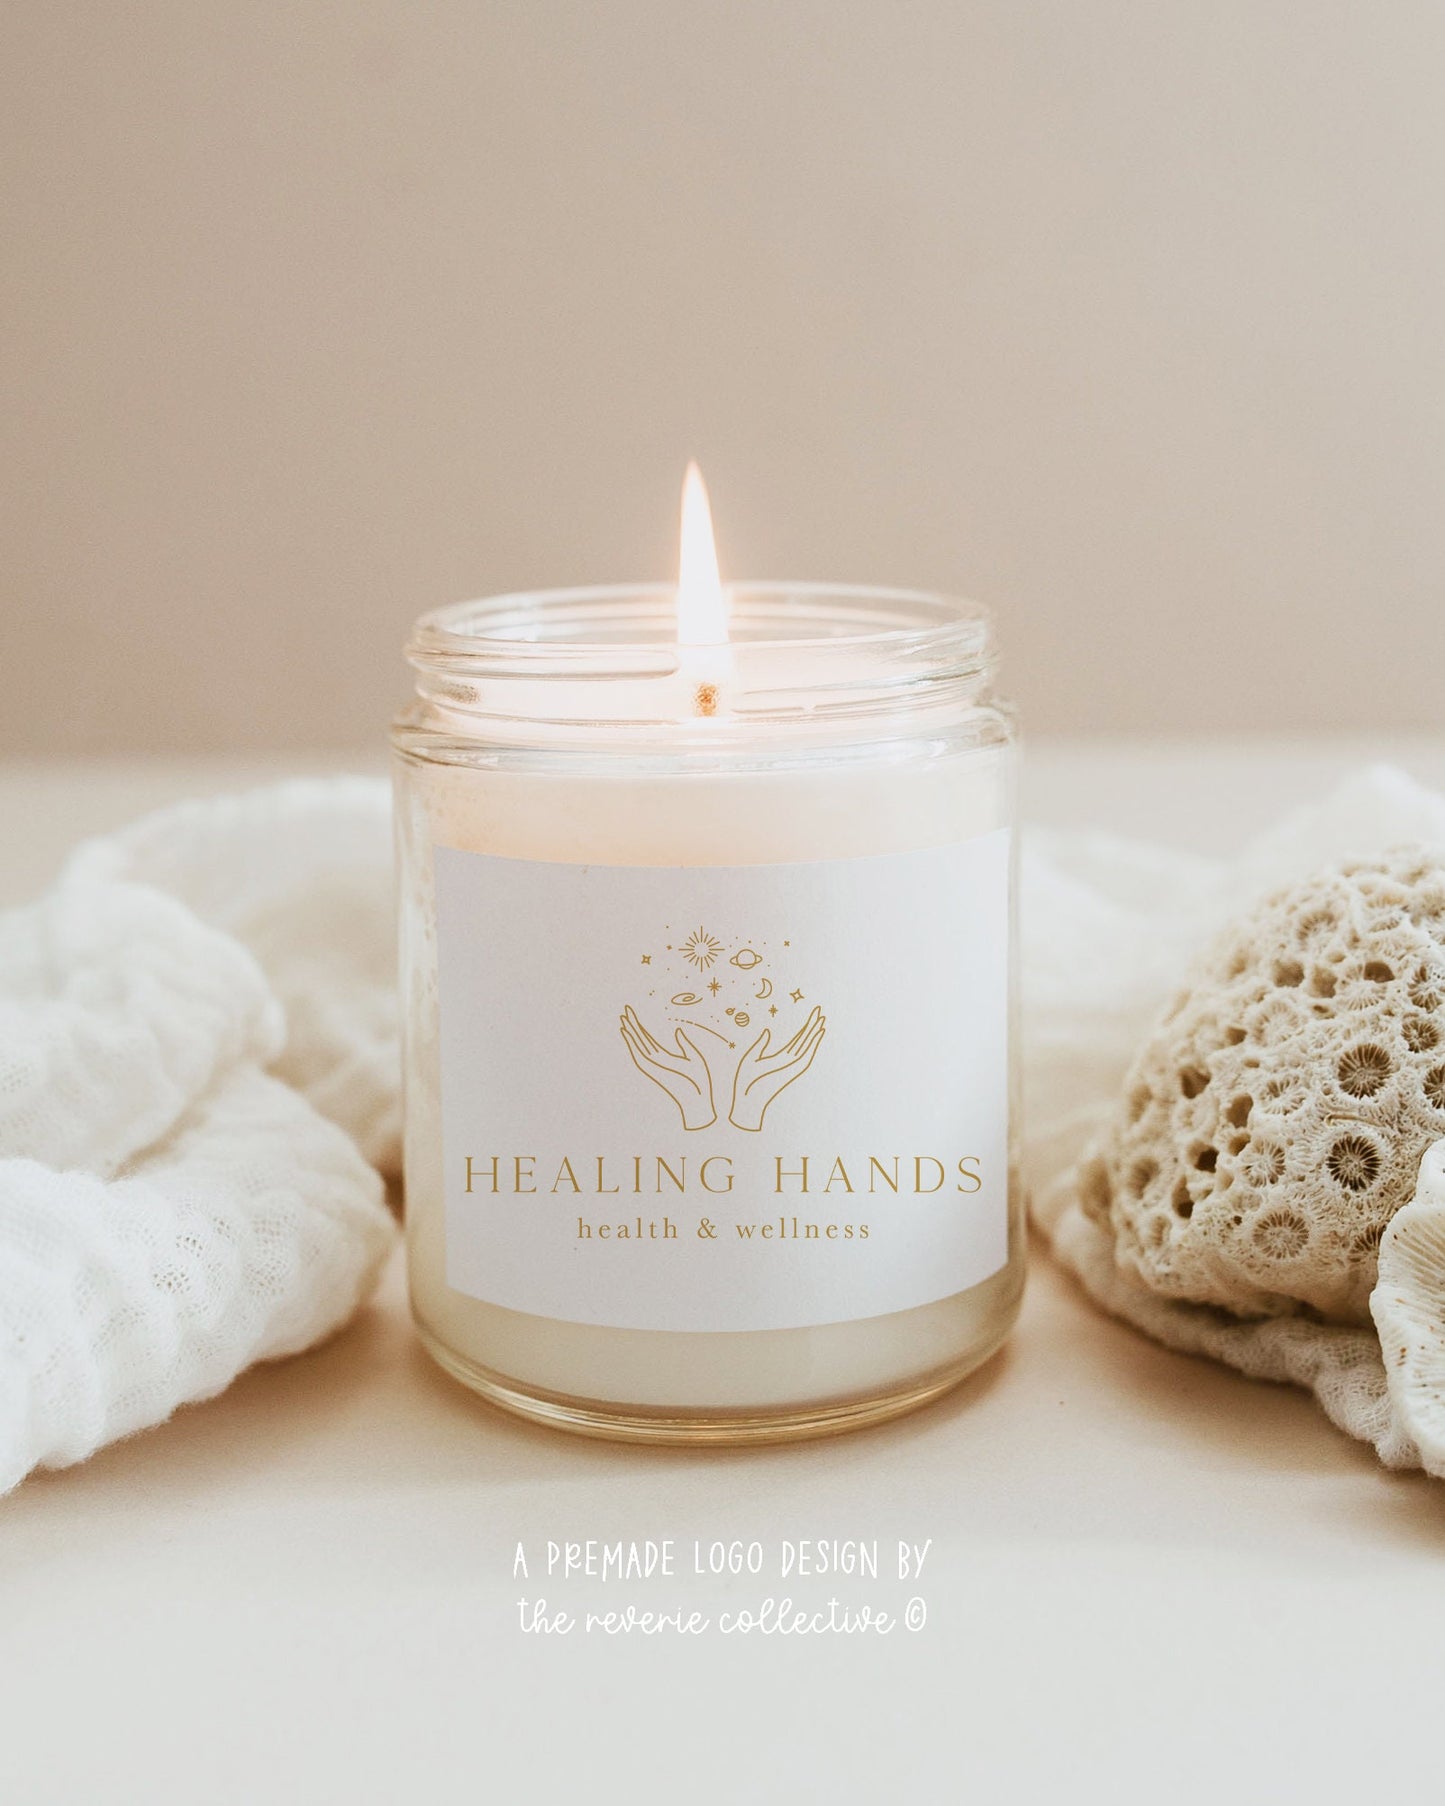 Healing Hands | Premade Logo Design | Boho, Moon, Stars, Celestial